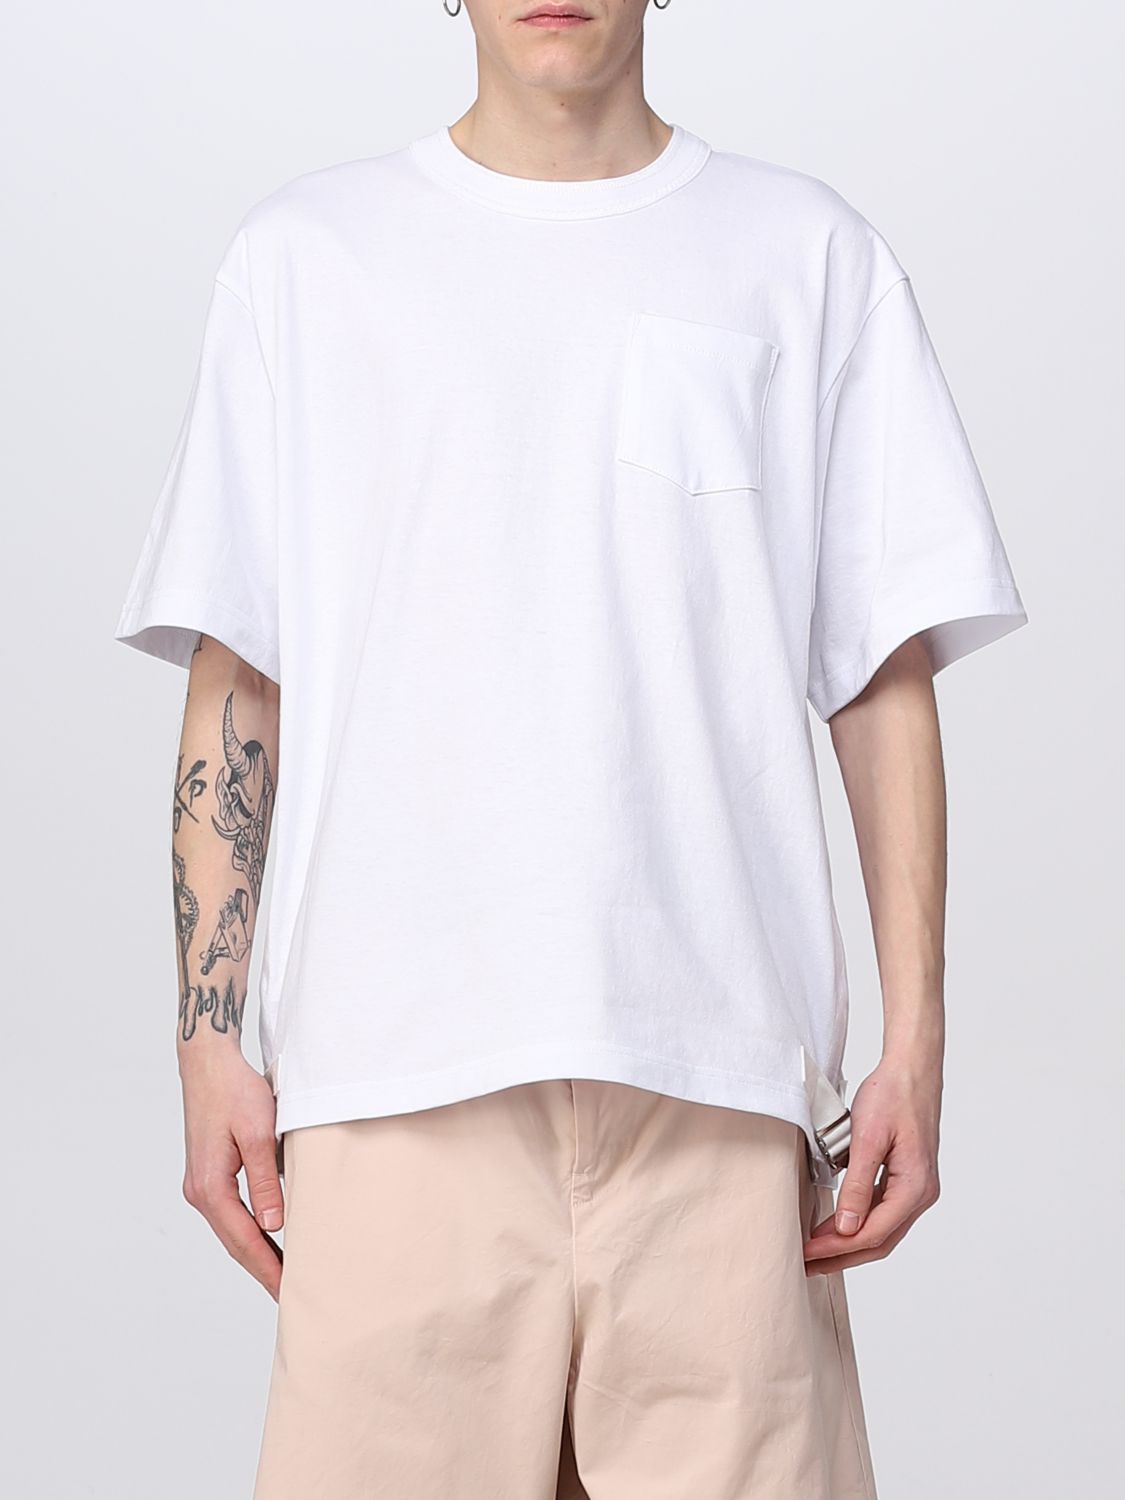 Sacai Outlet: t-shirt for man - White | Sacai t-shirt 2303061M online ...